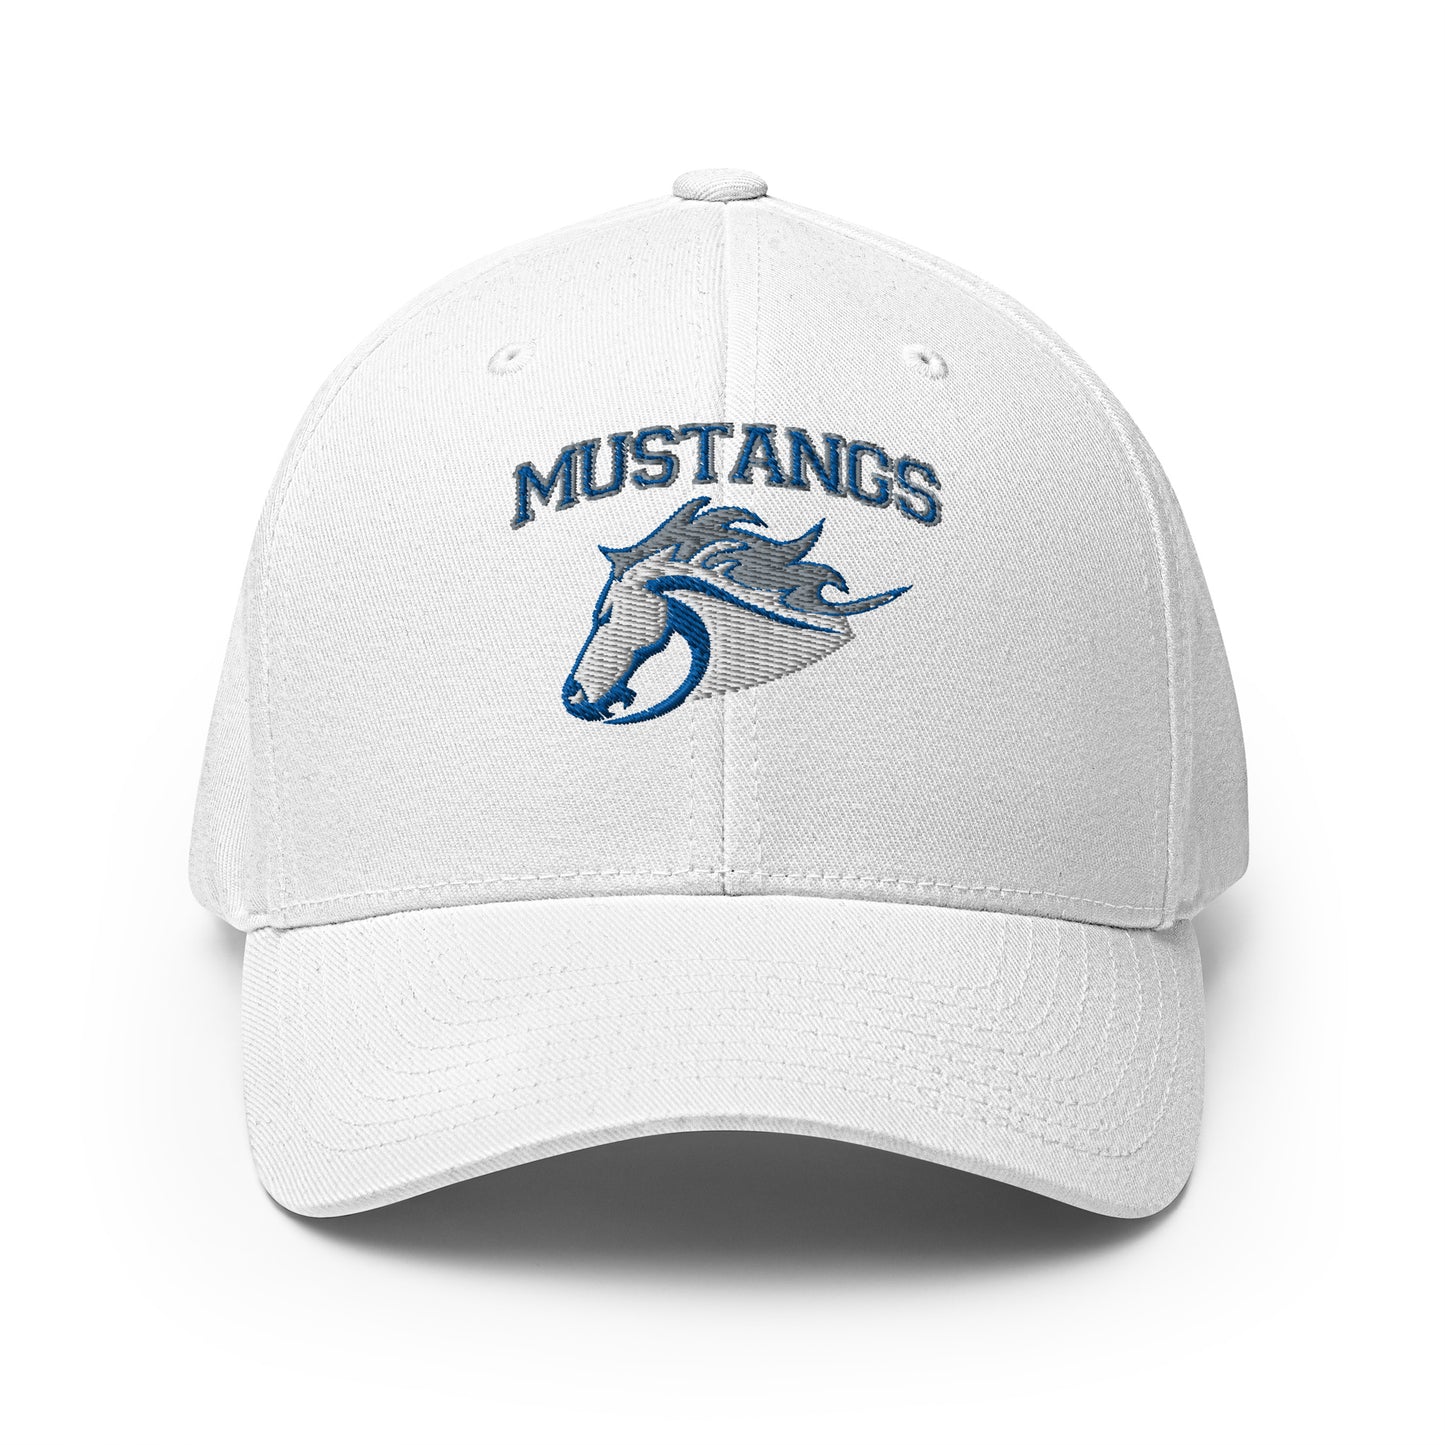 Mustang Flexfit Structured Twill Cap